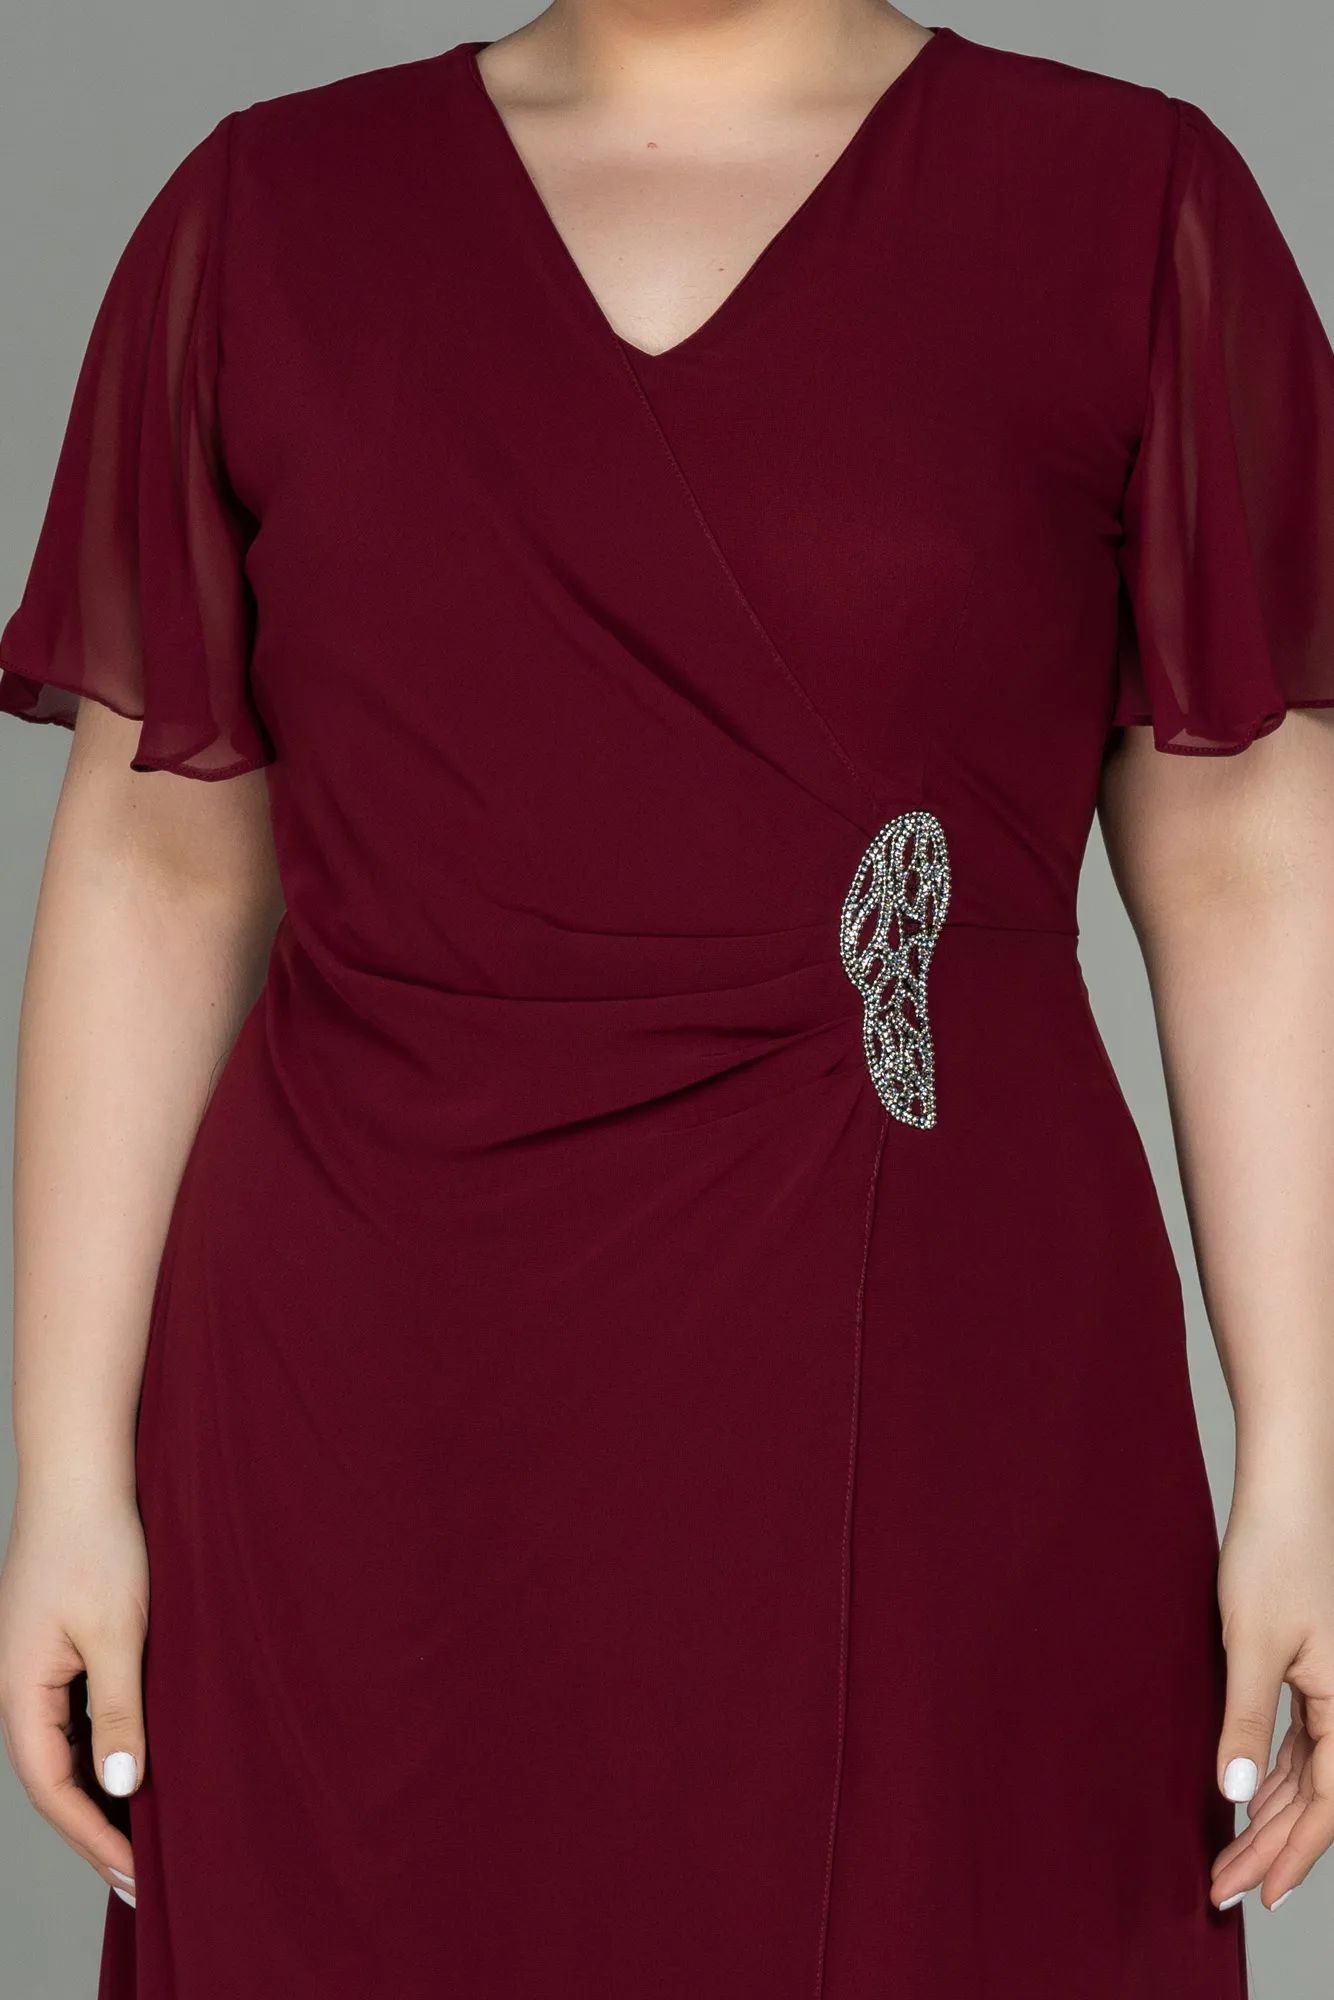 Burgundy-Midi Chiffon Plus Size Evening Dress ABK1660